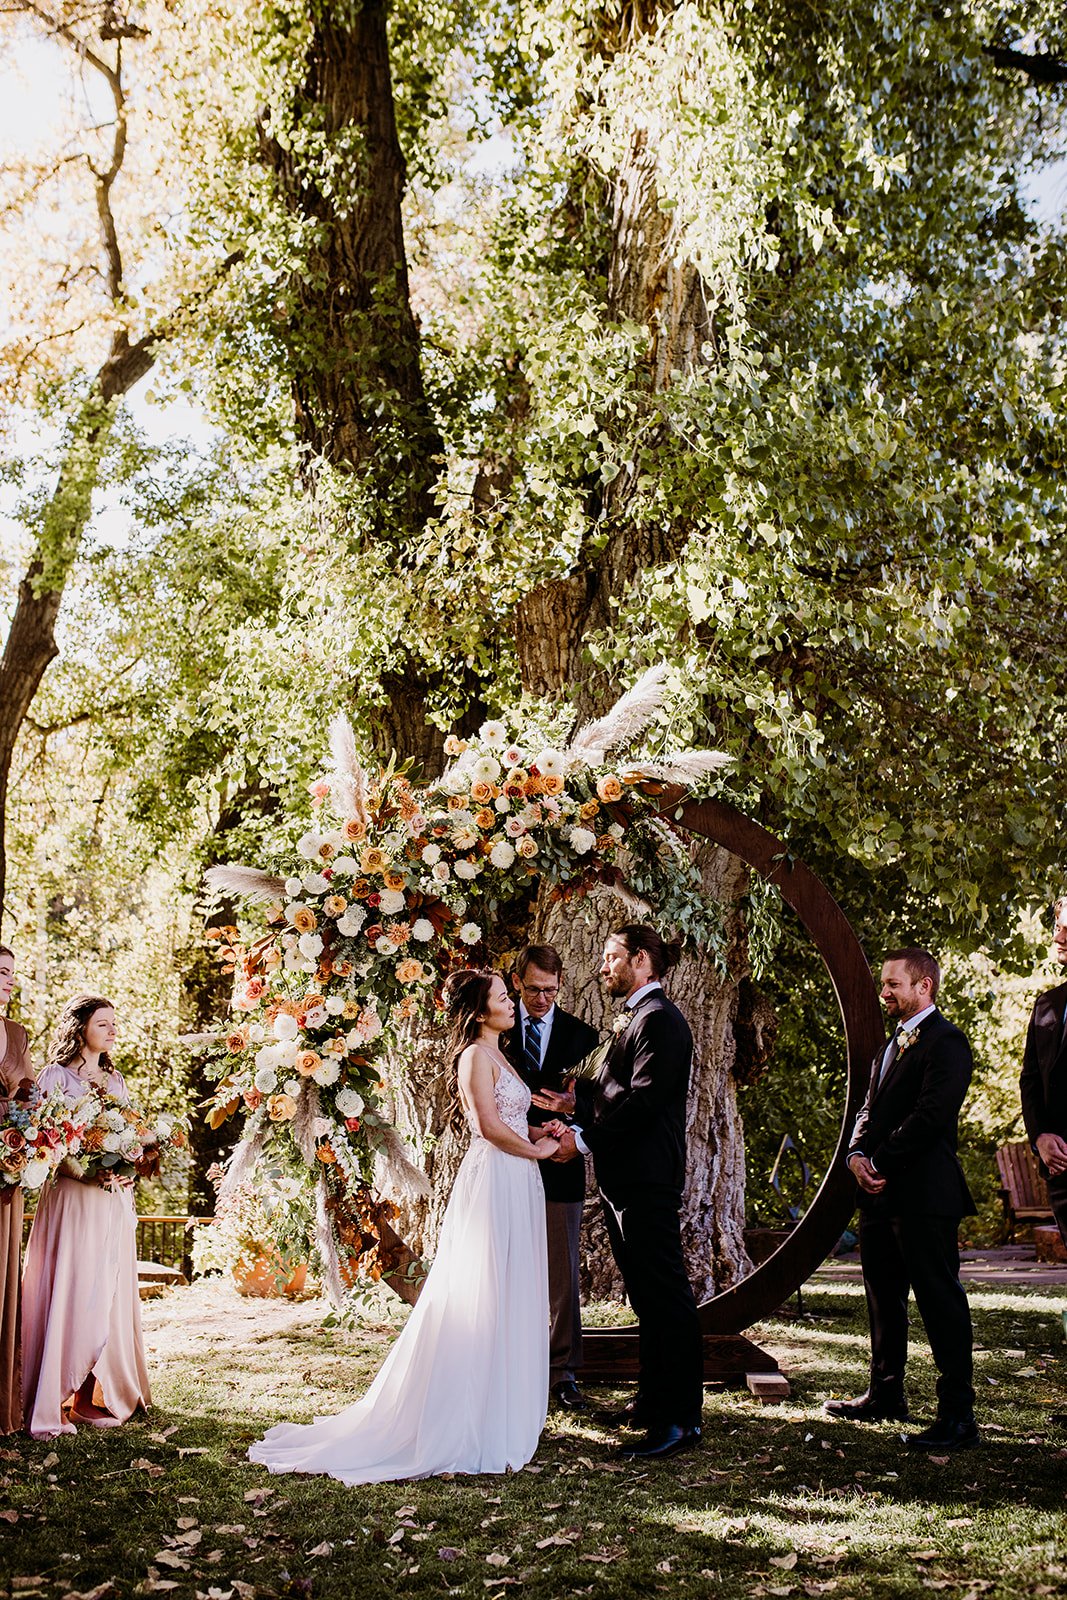 Plume&Furrow-WeddingFlorist-Garrison&Gabriella-TaylerCarlisle-Lyons-Farmette-October-Colorado-Bride-Groom-Ceremony-Arbor.jpg